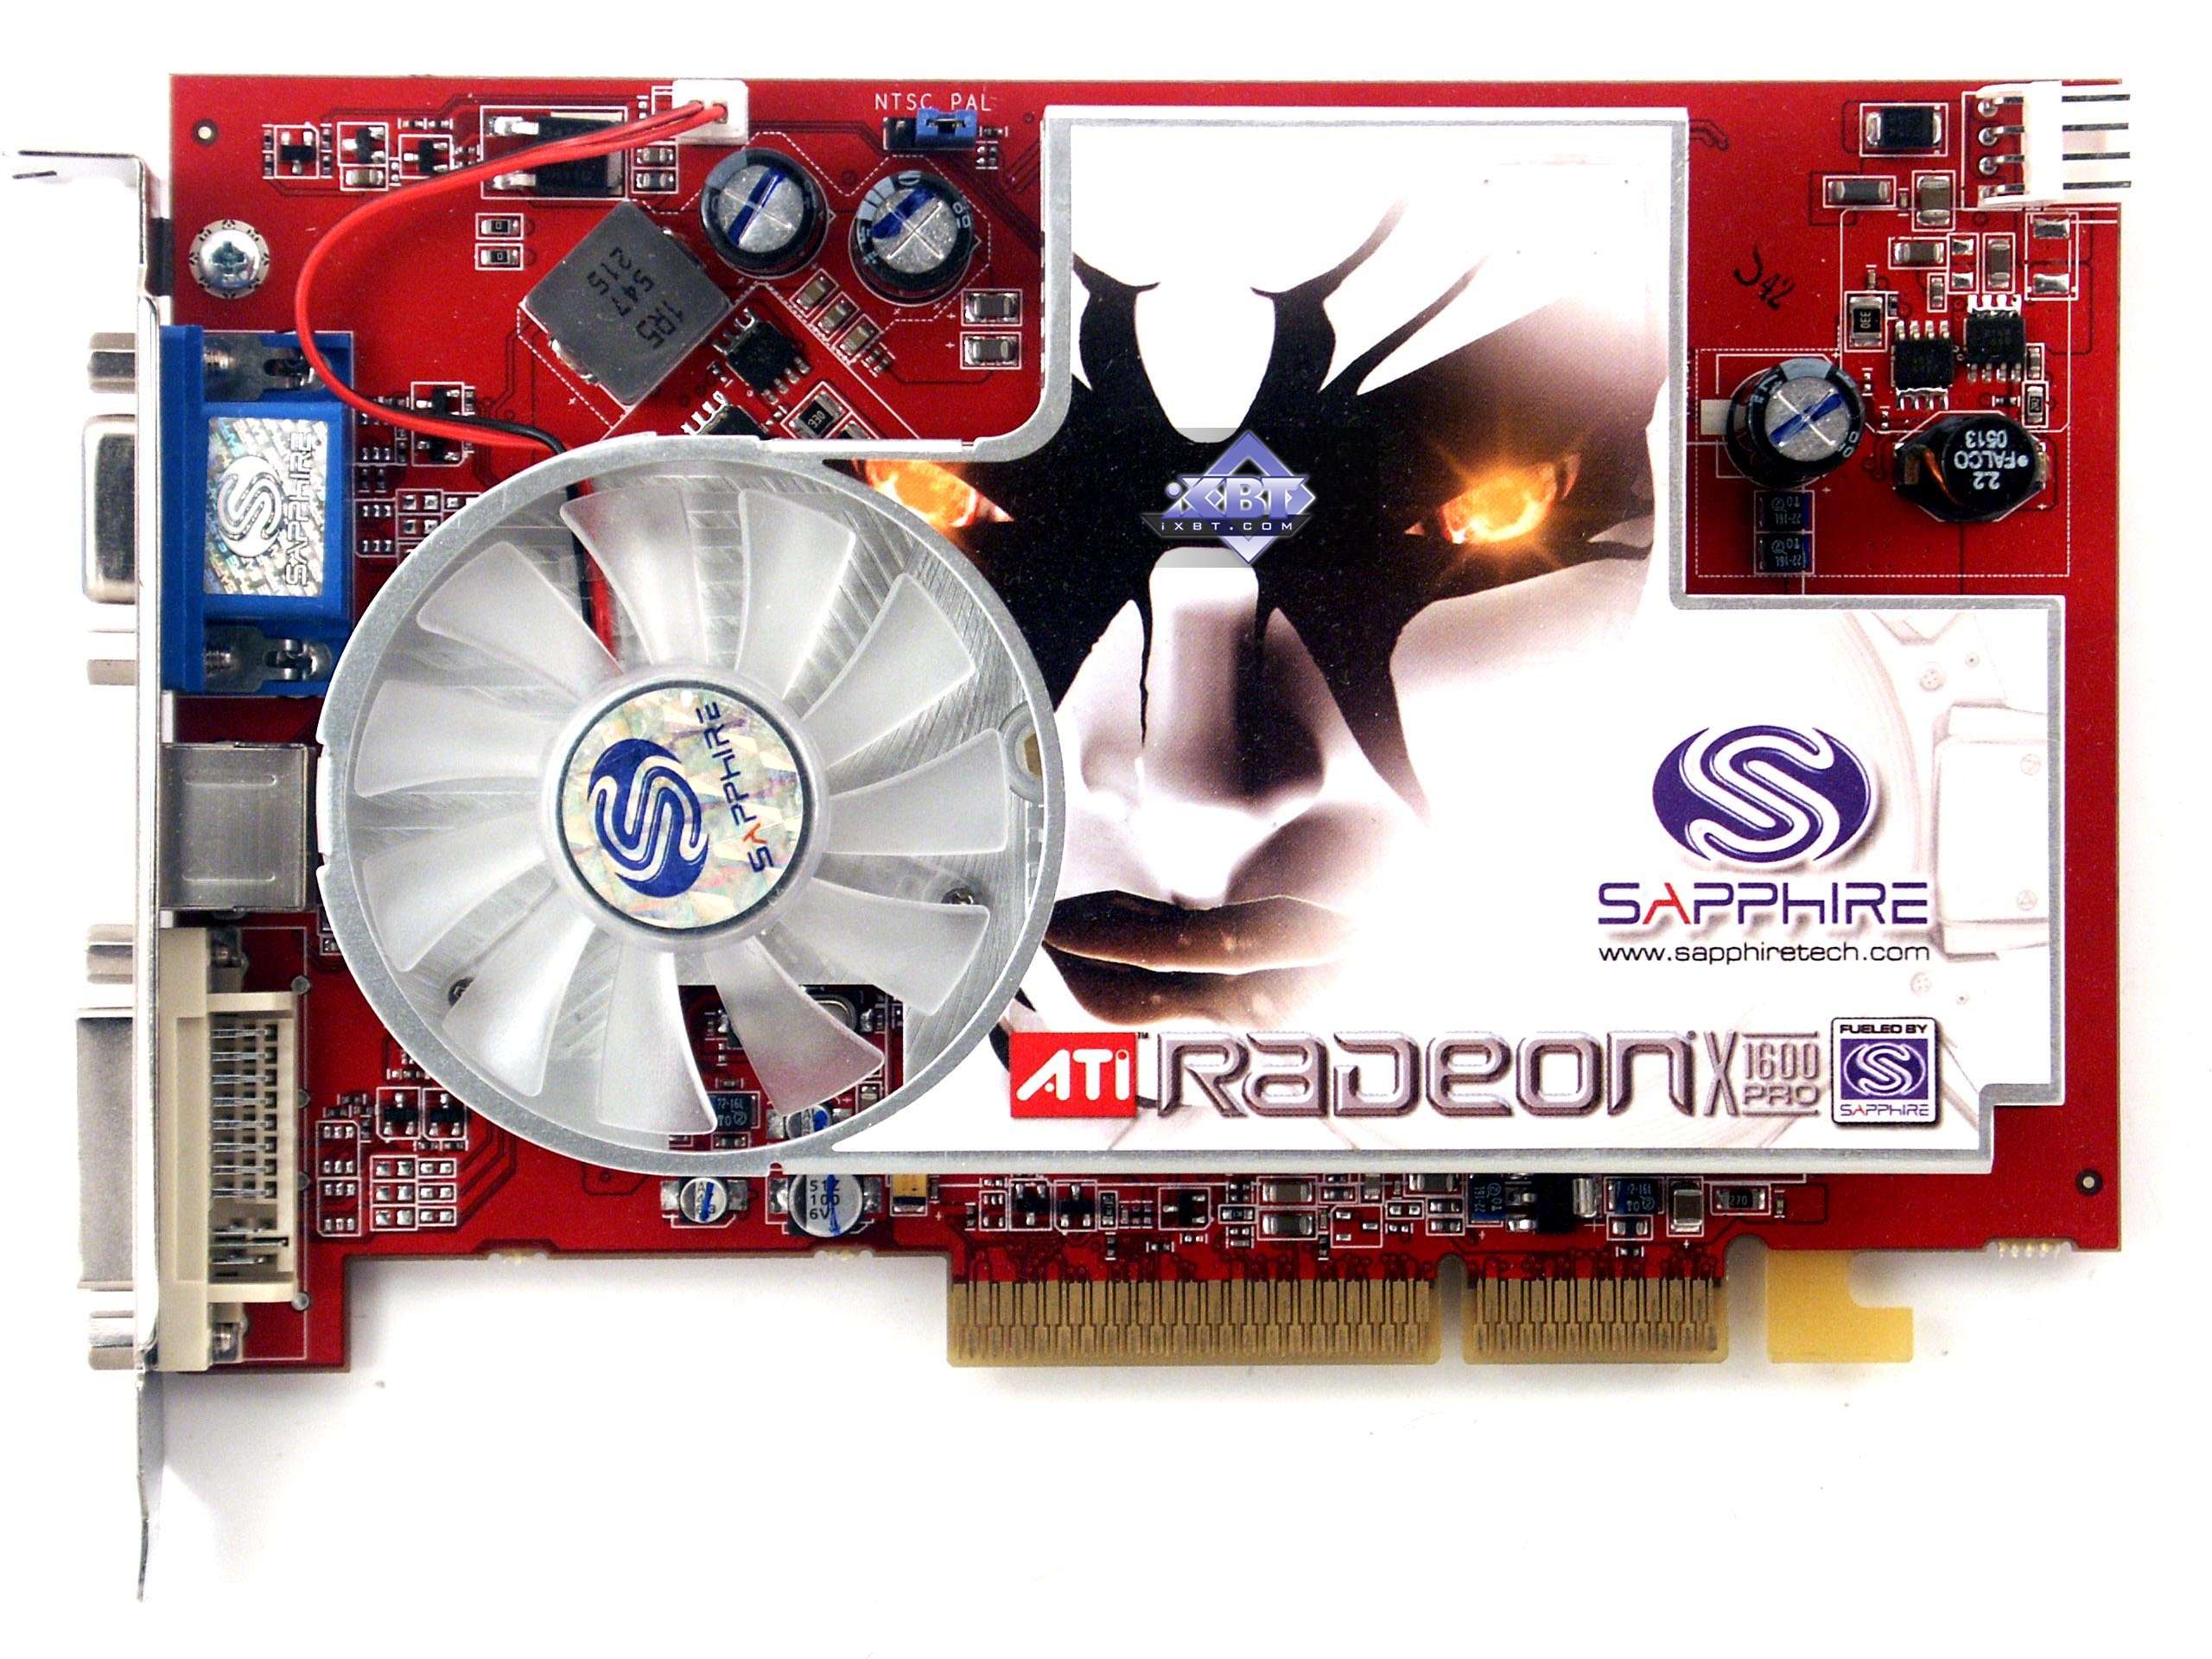 Ati radeon x1600. Sapphire Radeon x1600 Pro. GECUBE Radeon x1600 Pro 256mb. Видеокарта Radeon x1300. Sapphire 1600 Pro.